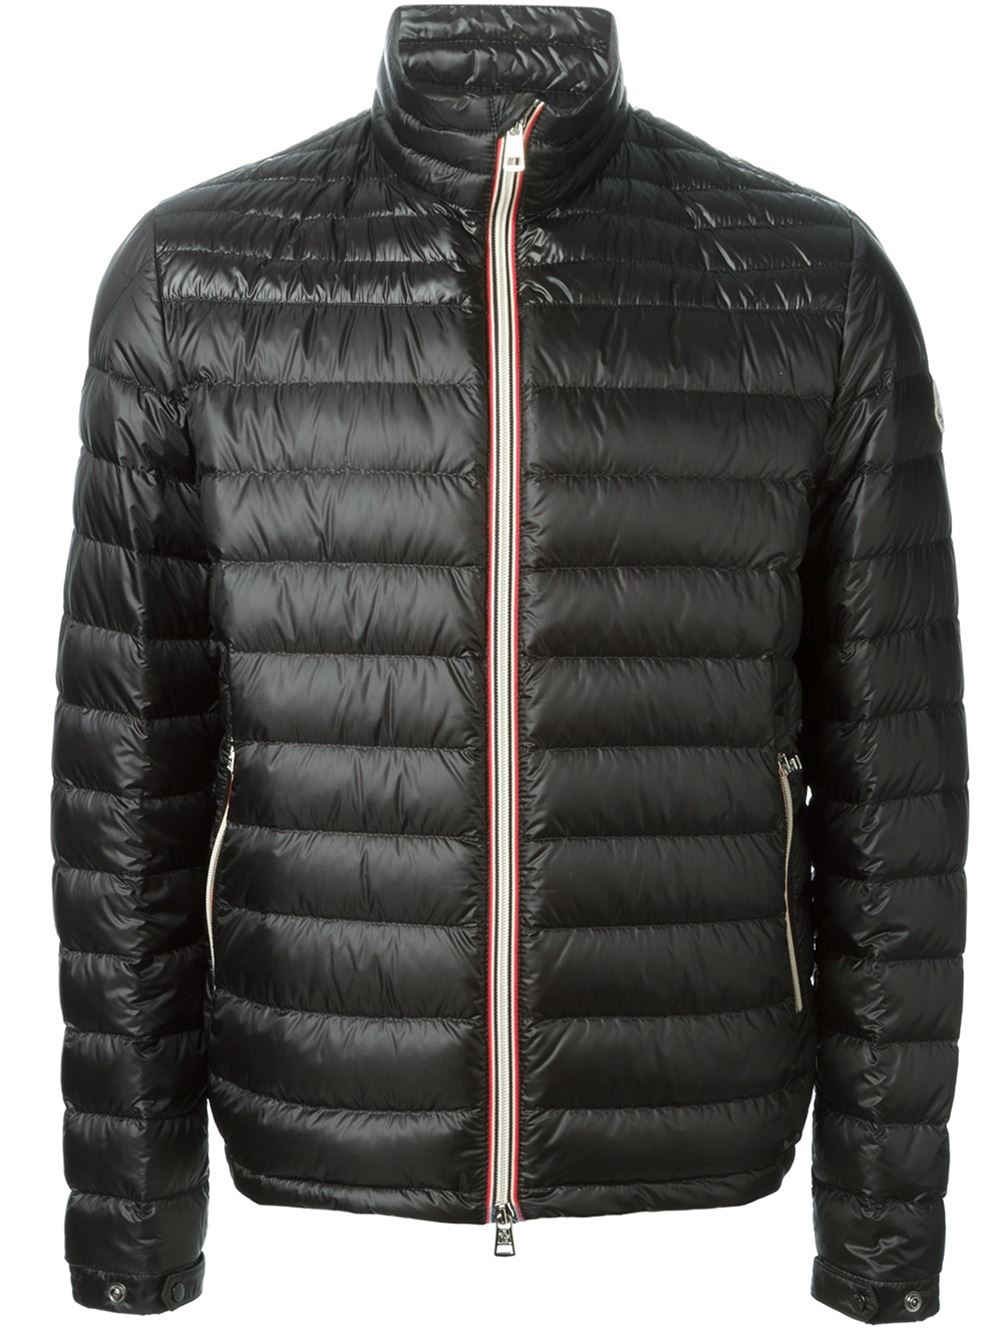 Lyst - Moncler 'Daniel' Padded Jacket in Black for Men